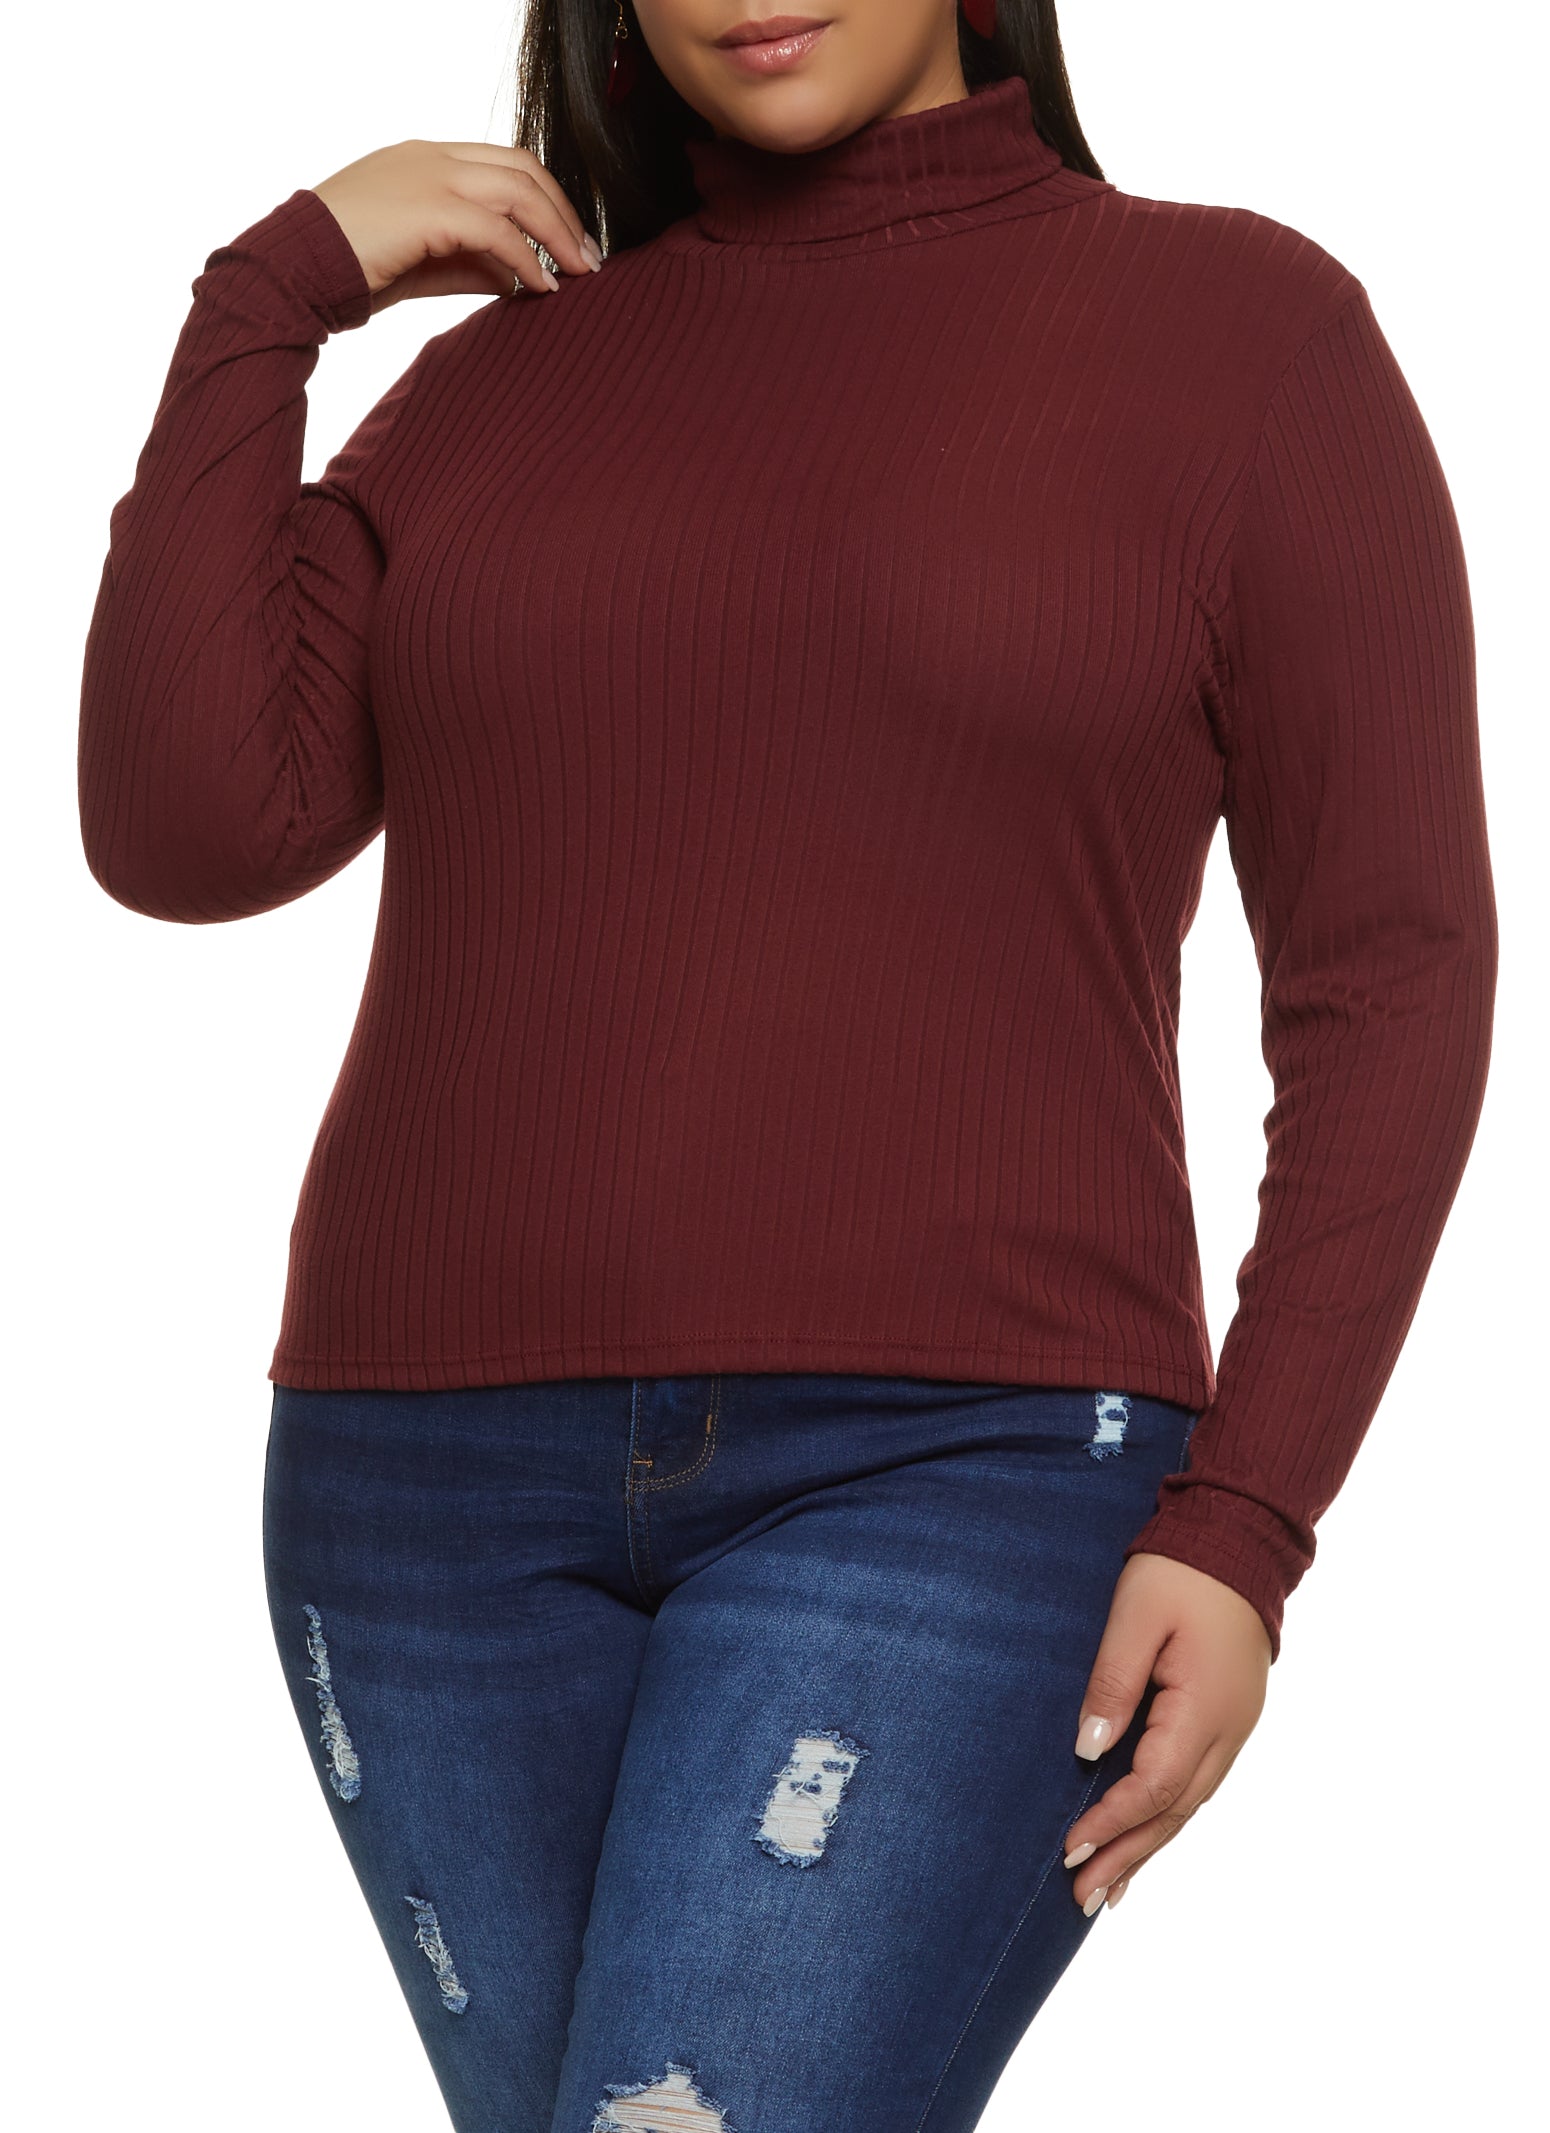 Womens Plus Size Basic Ribbed Knit Turtleneck Top, Burgundy, Size 1X